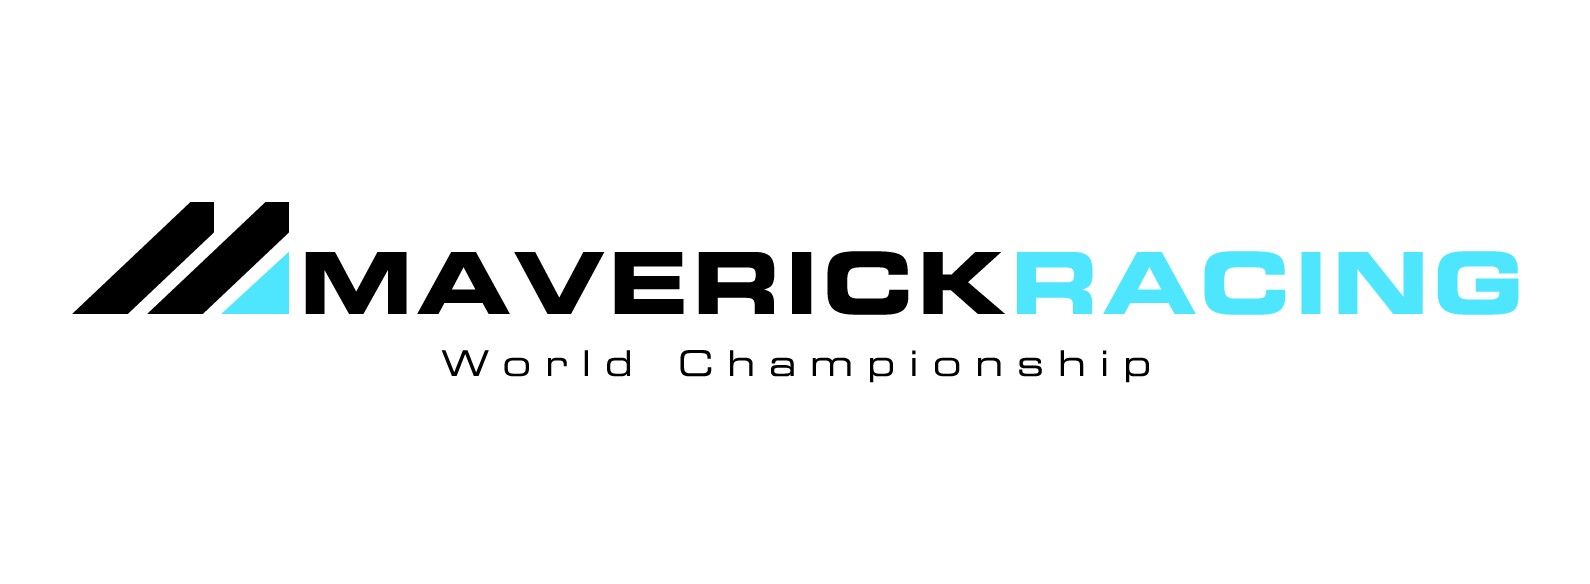 Maverick Racing 2022 season